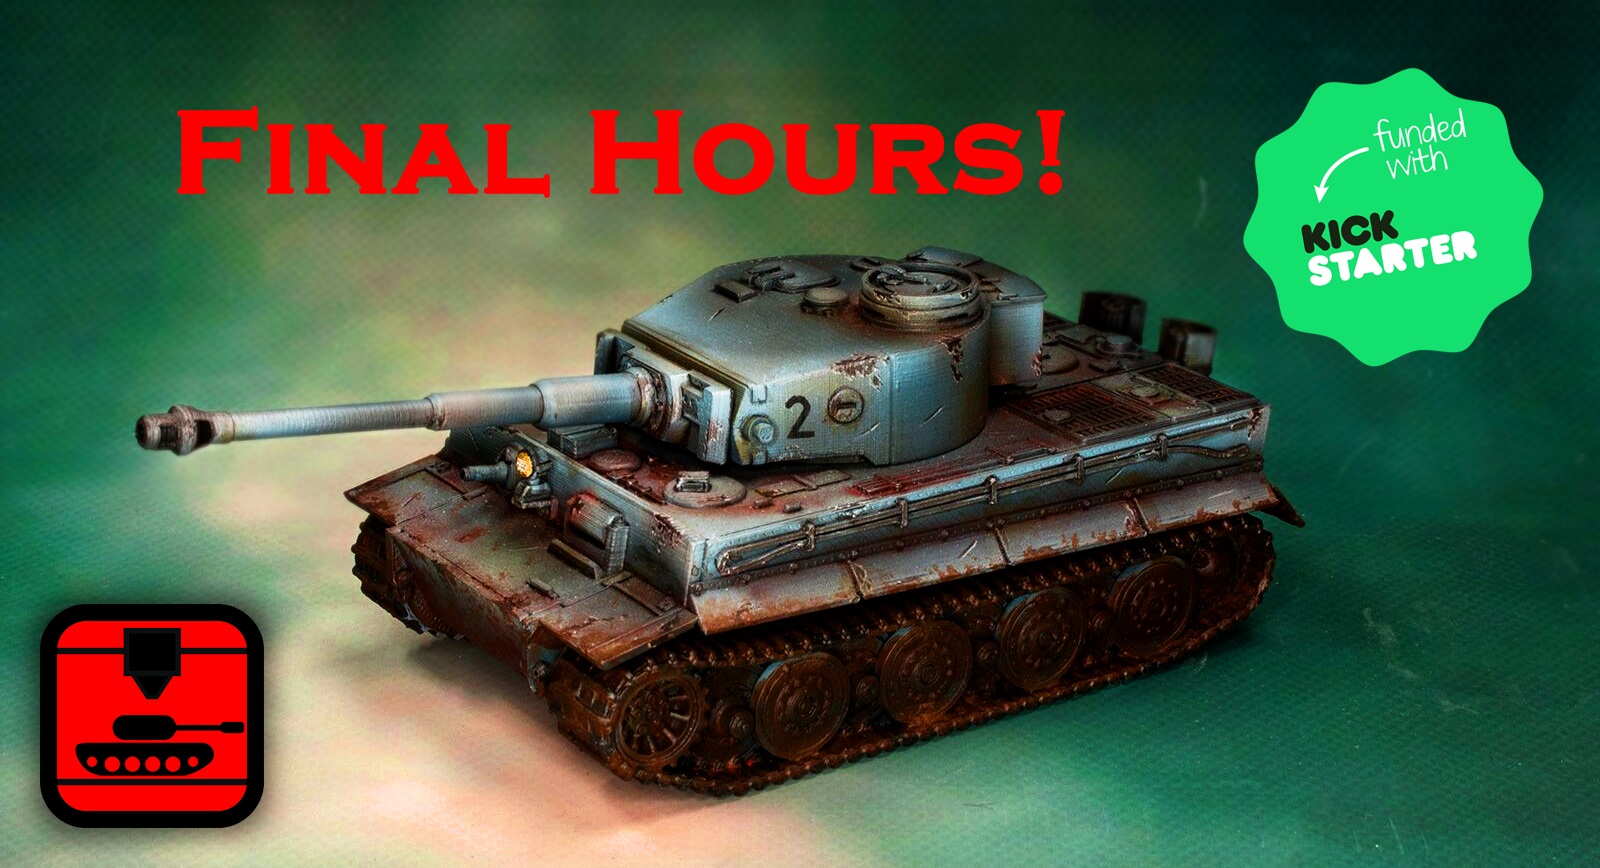 3D Printable Tanks—Final Hours on Kickstarter